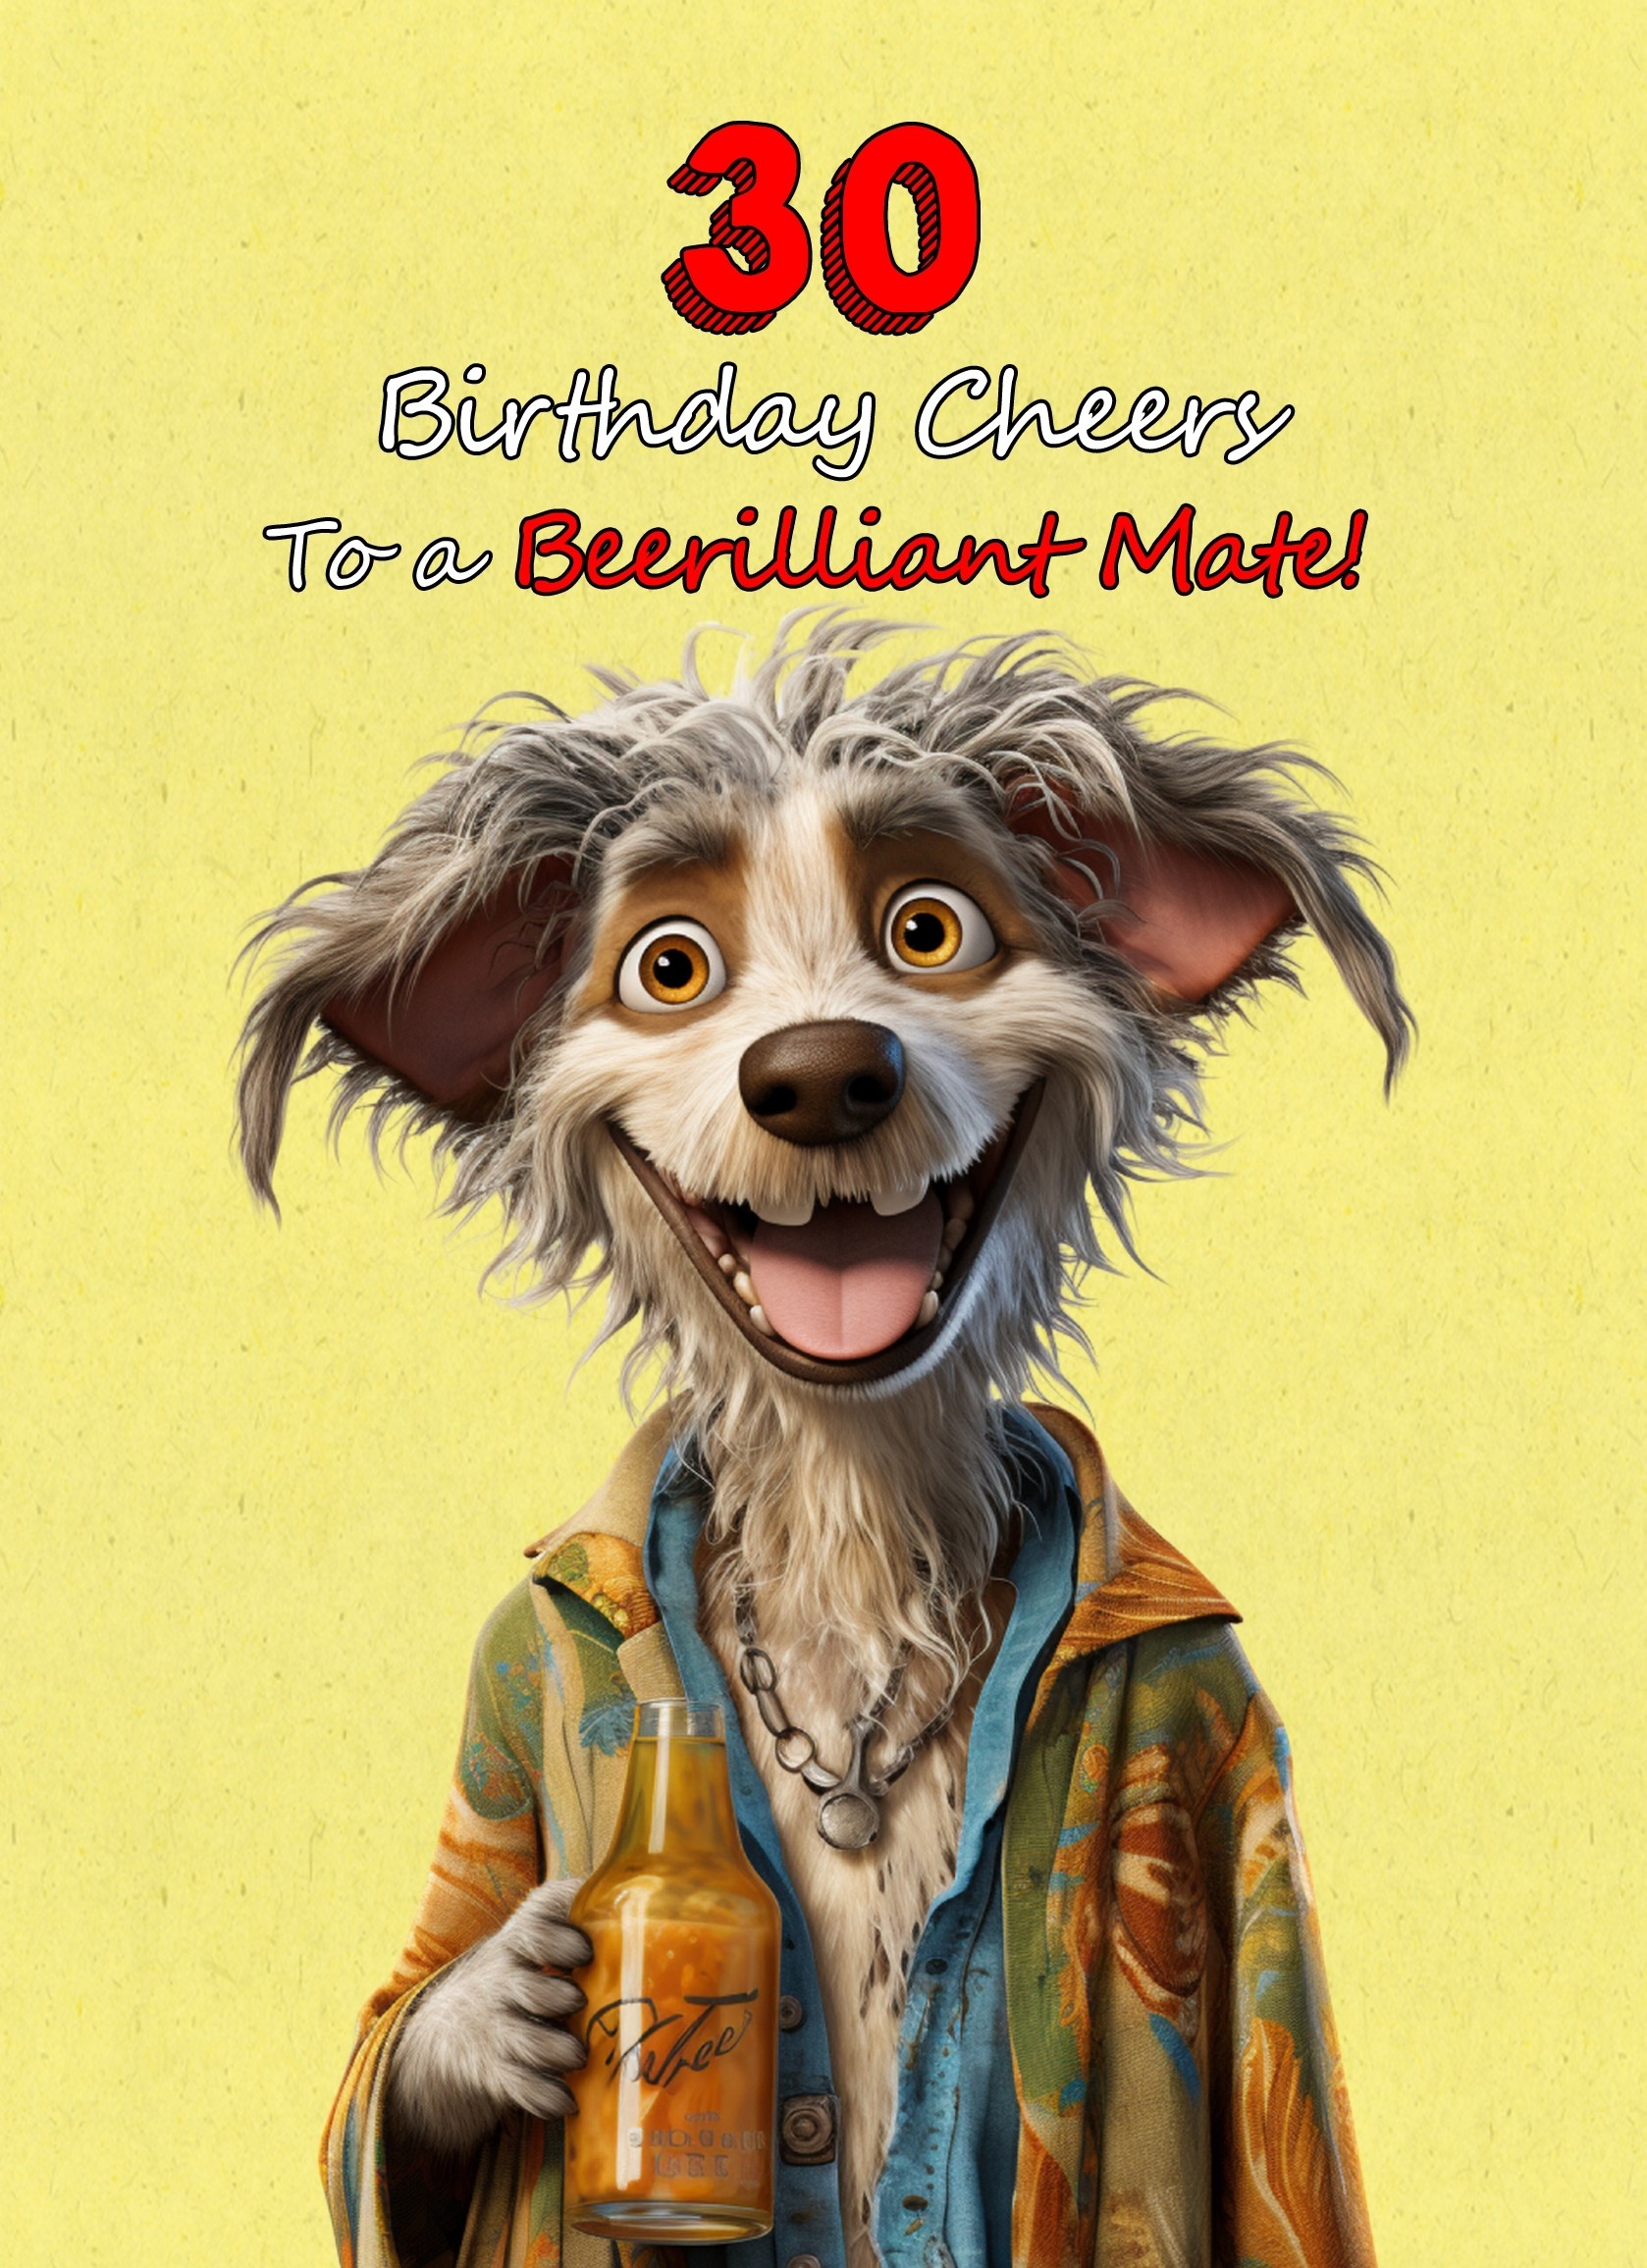 Mate 30th Birthday Card (Funny Beerilliant Birthday Cheers, Design 2)